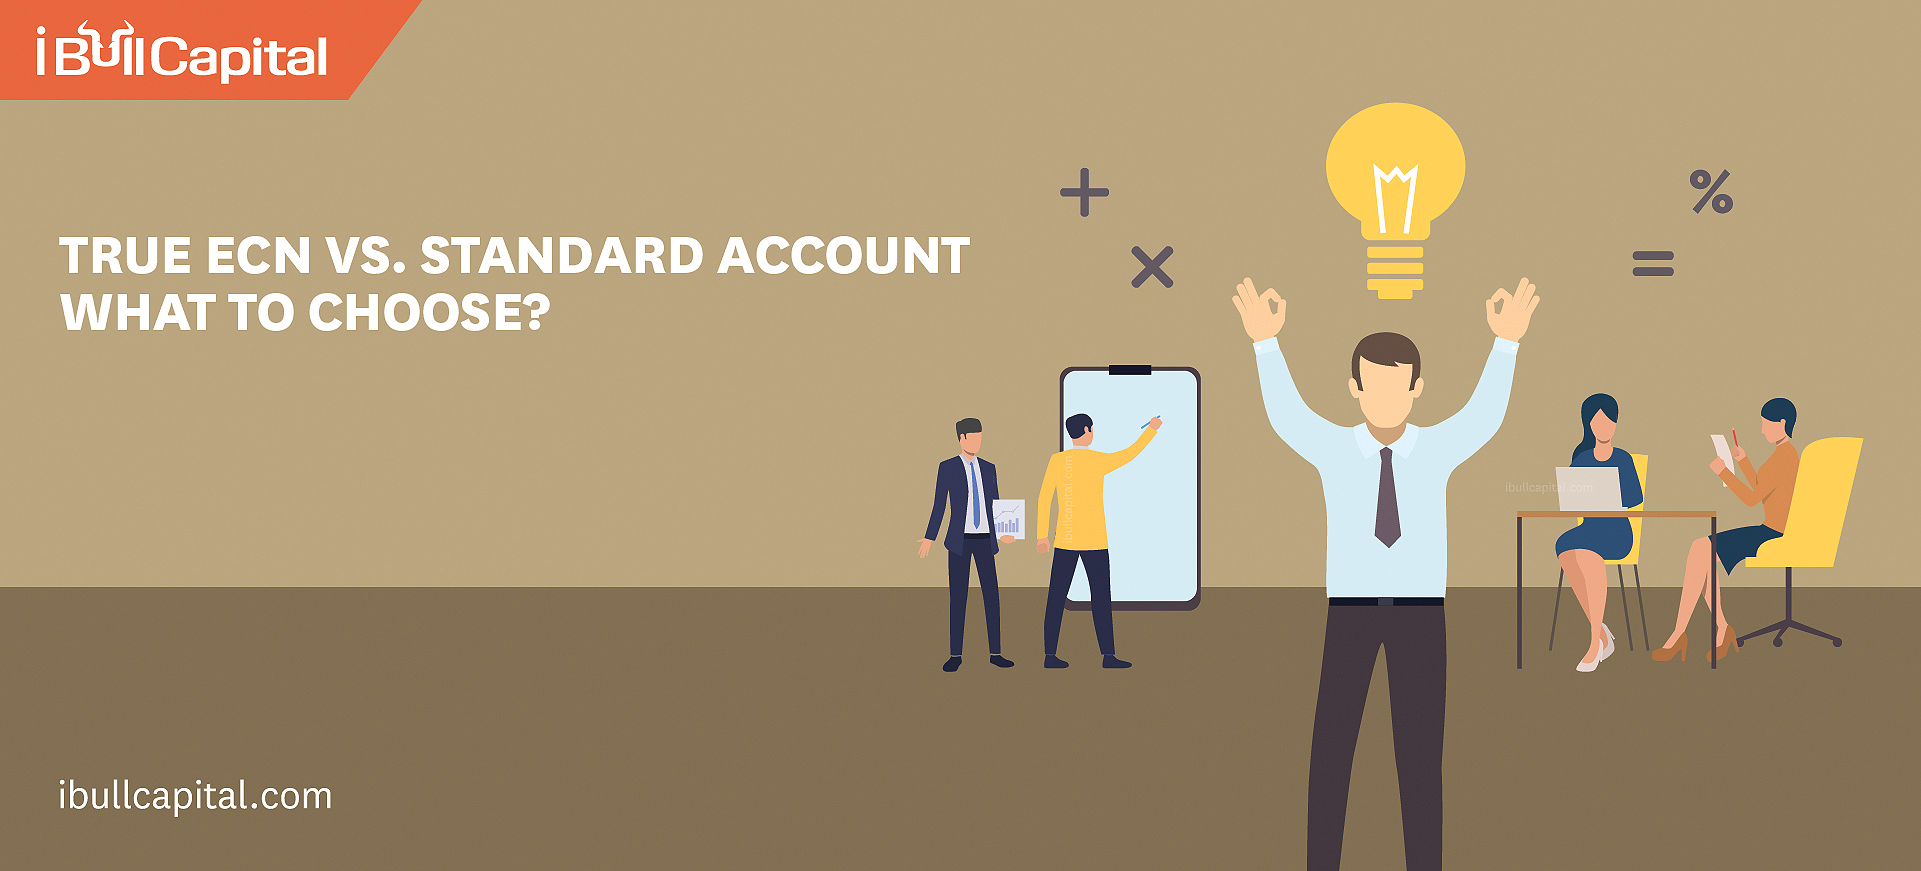 True ECN vs. Standard Account: What to Choose?| iBullCapital